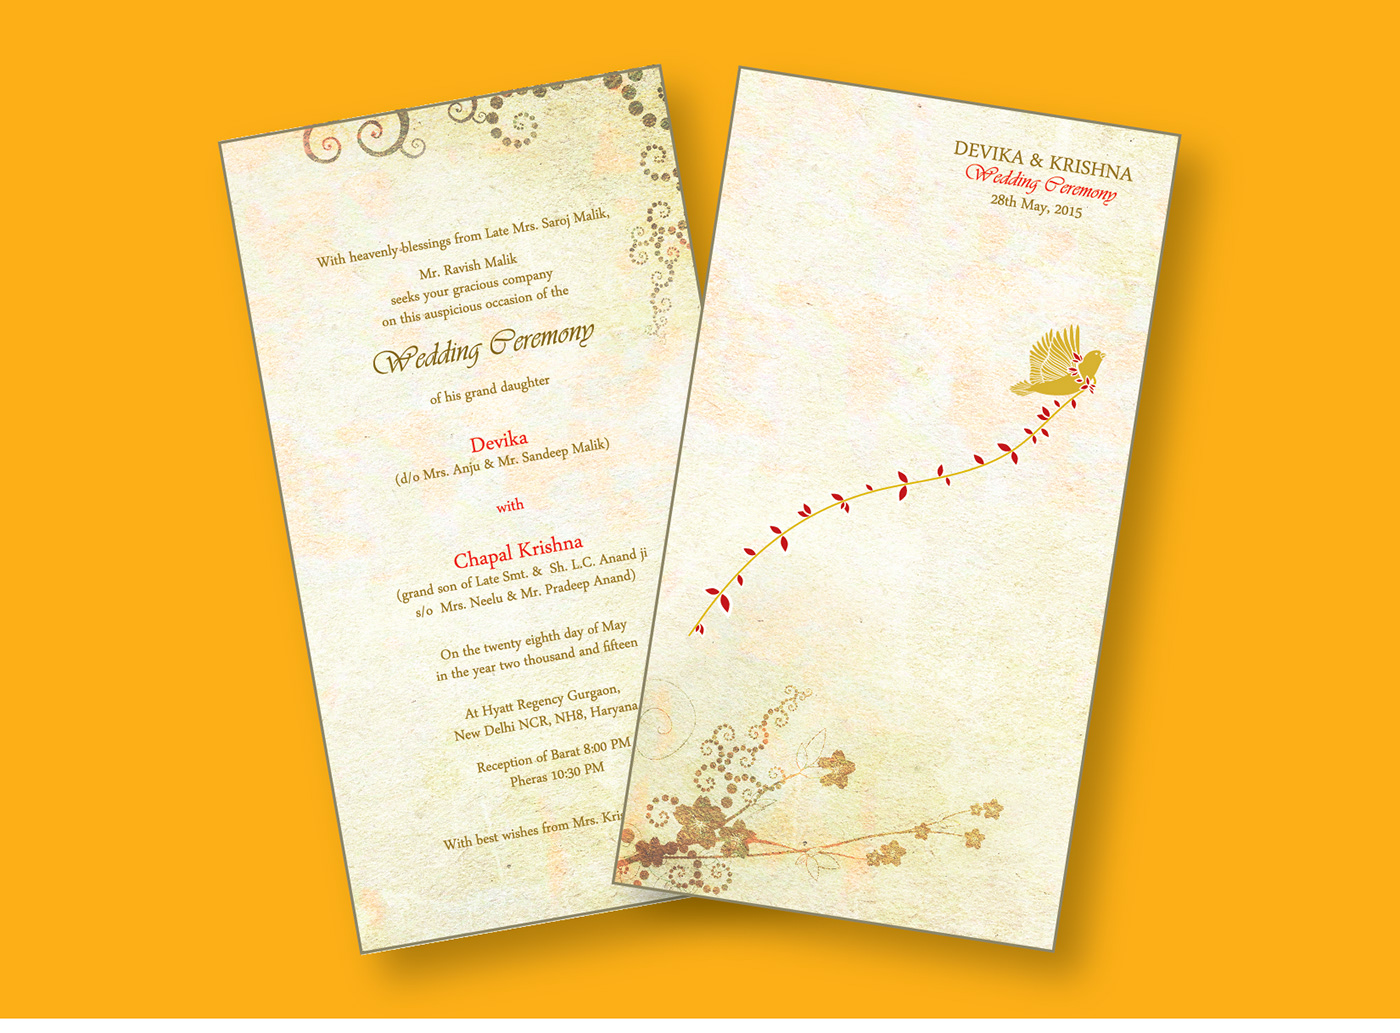 Wedding Invites Invitation indian wedding birthday card card designing